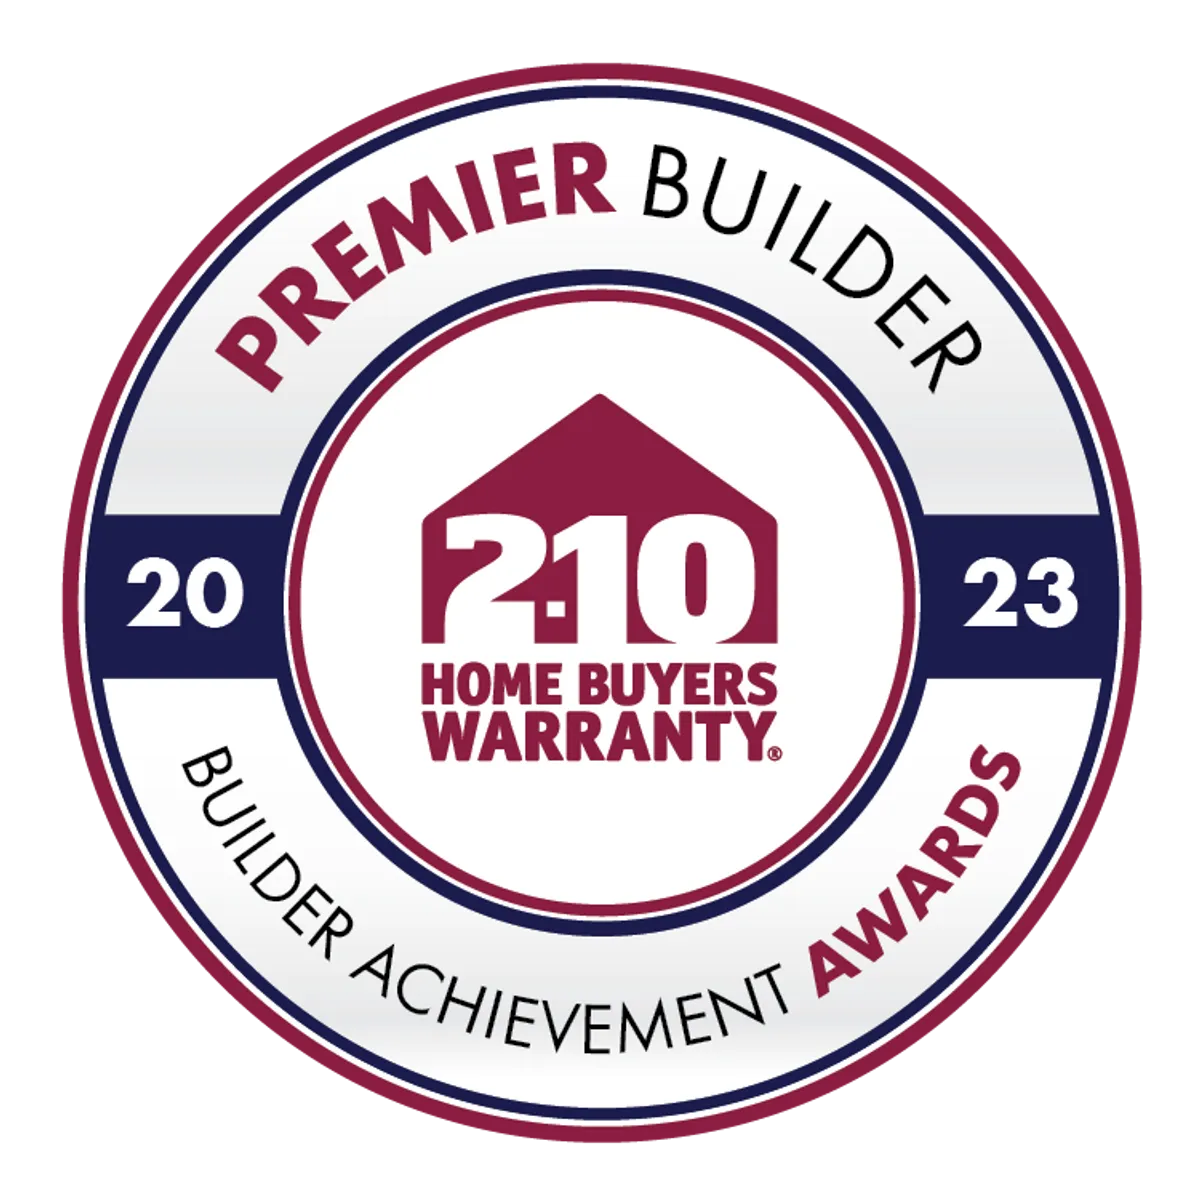 Logo - Premier Builder Achievement Award from 2-10 Home Buyers Warranty 2023